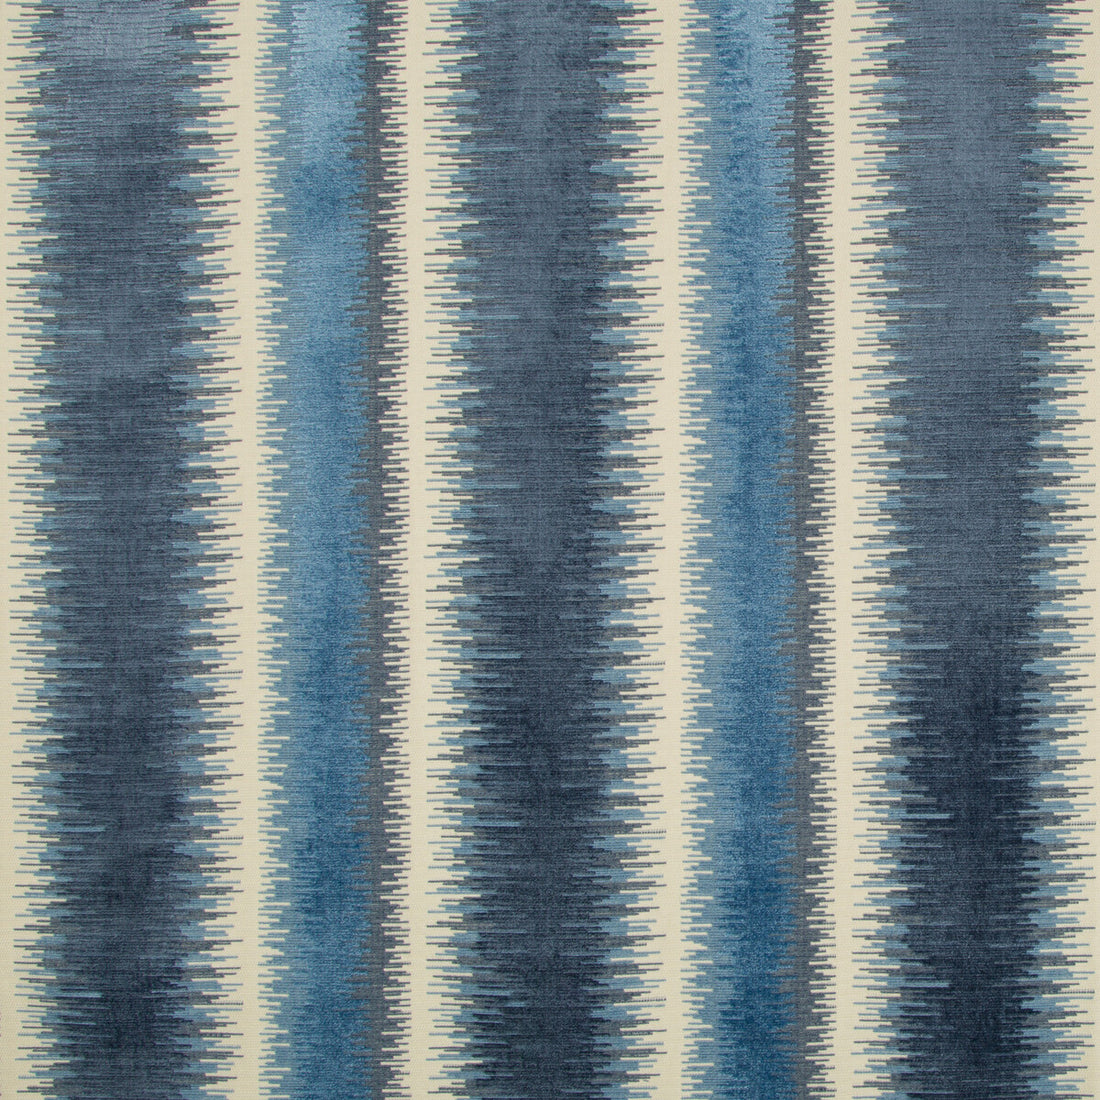 Bromo Velvet fabric in blue color - pattern 8018115.5.0 - by Brunschwig &amp; Fils in the Baret collection